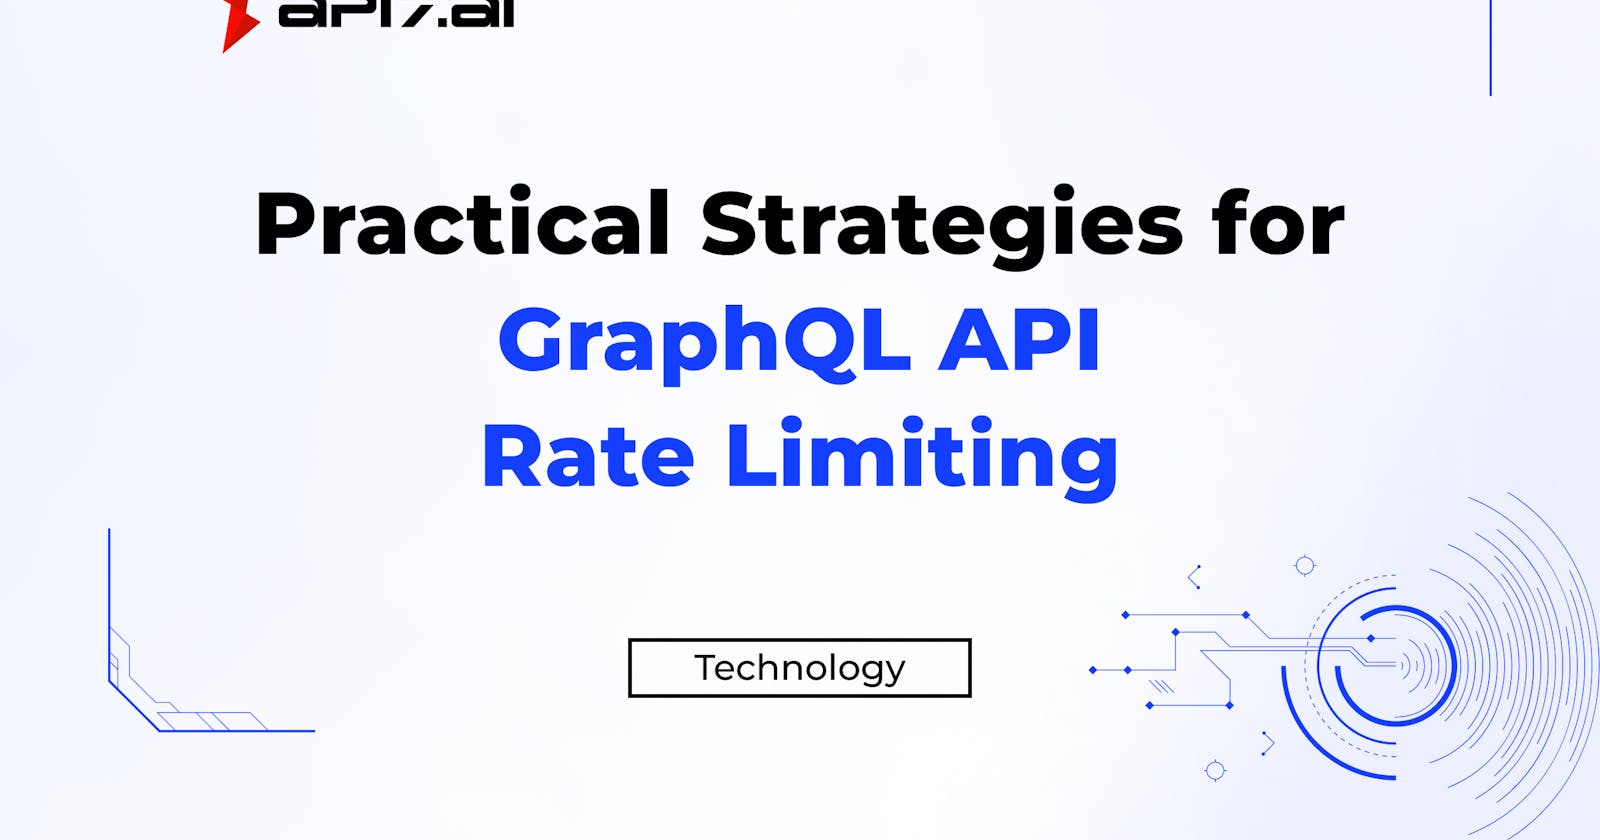 Practical Strategies for GraphQL API Rate Limiting